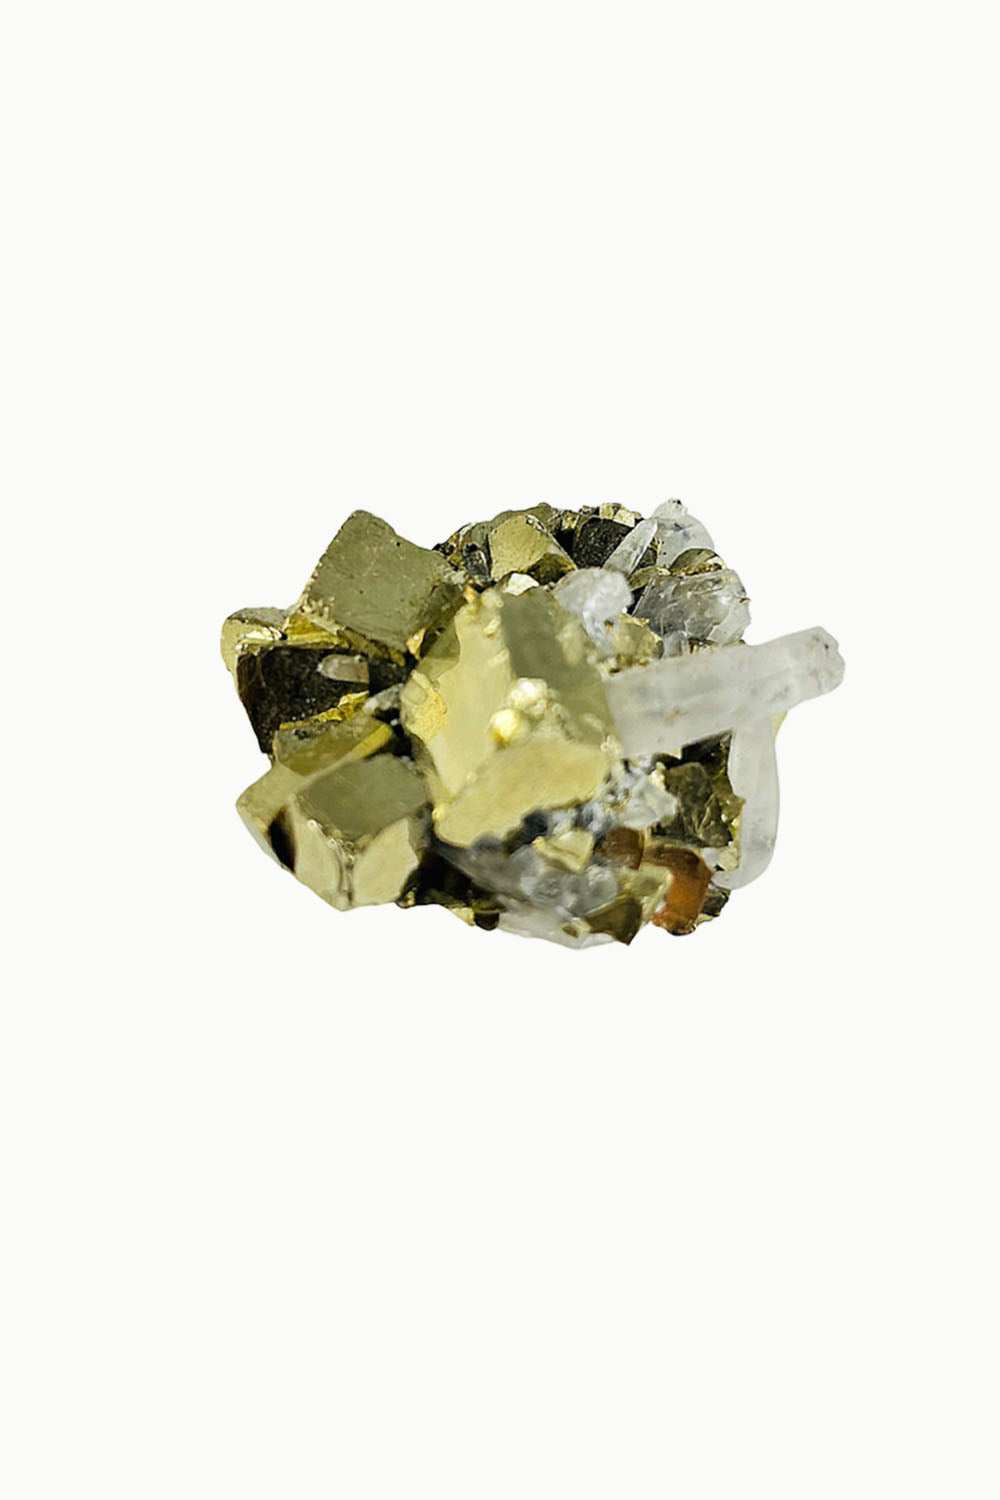 Pyrite and Quartz Crystal Cluster in Matrix #1